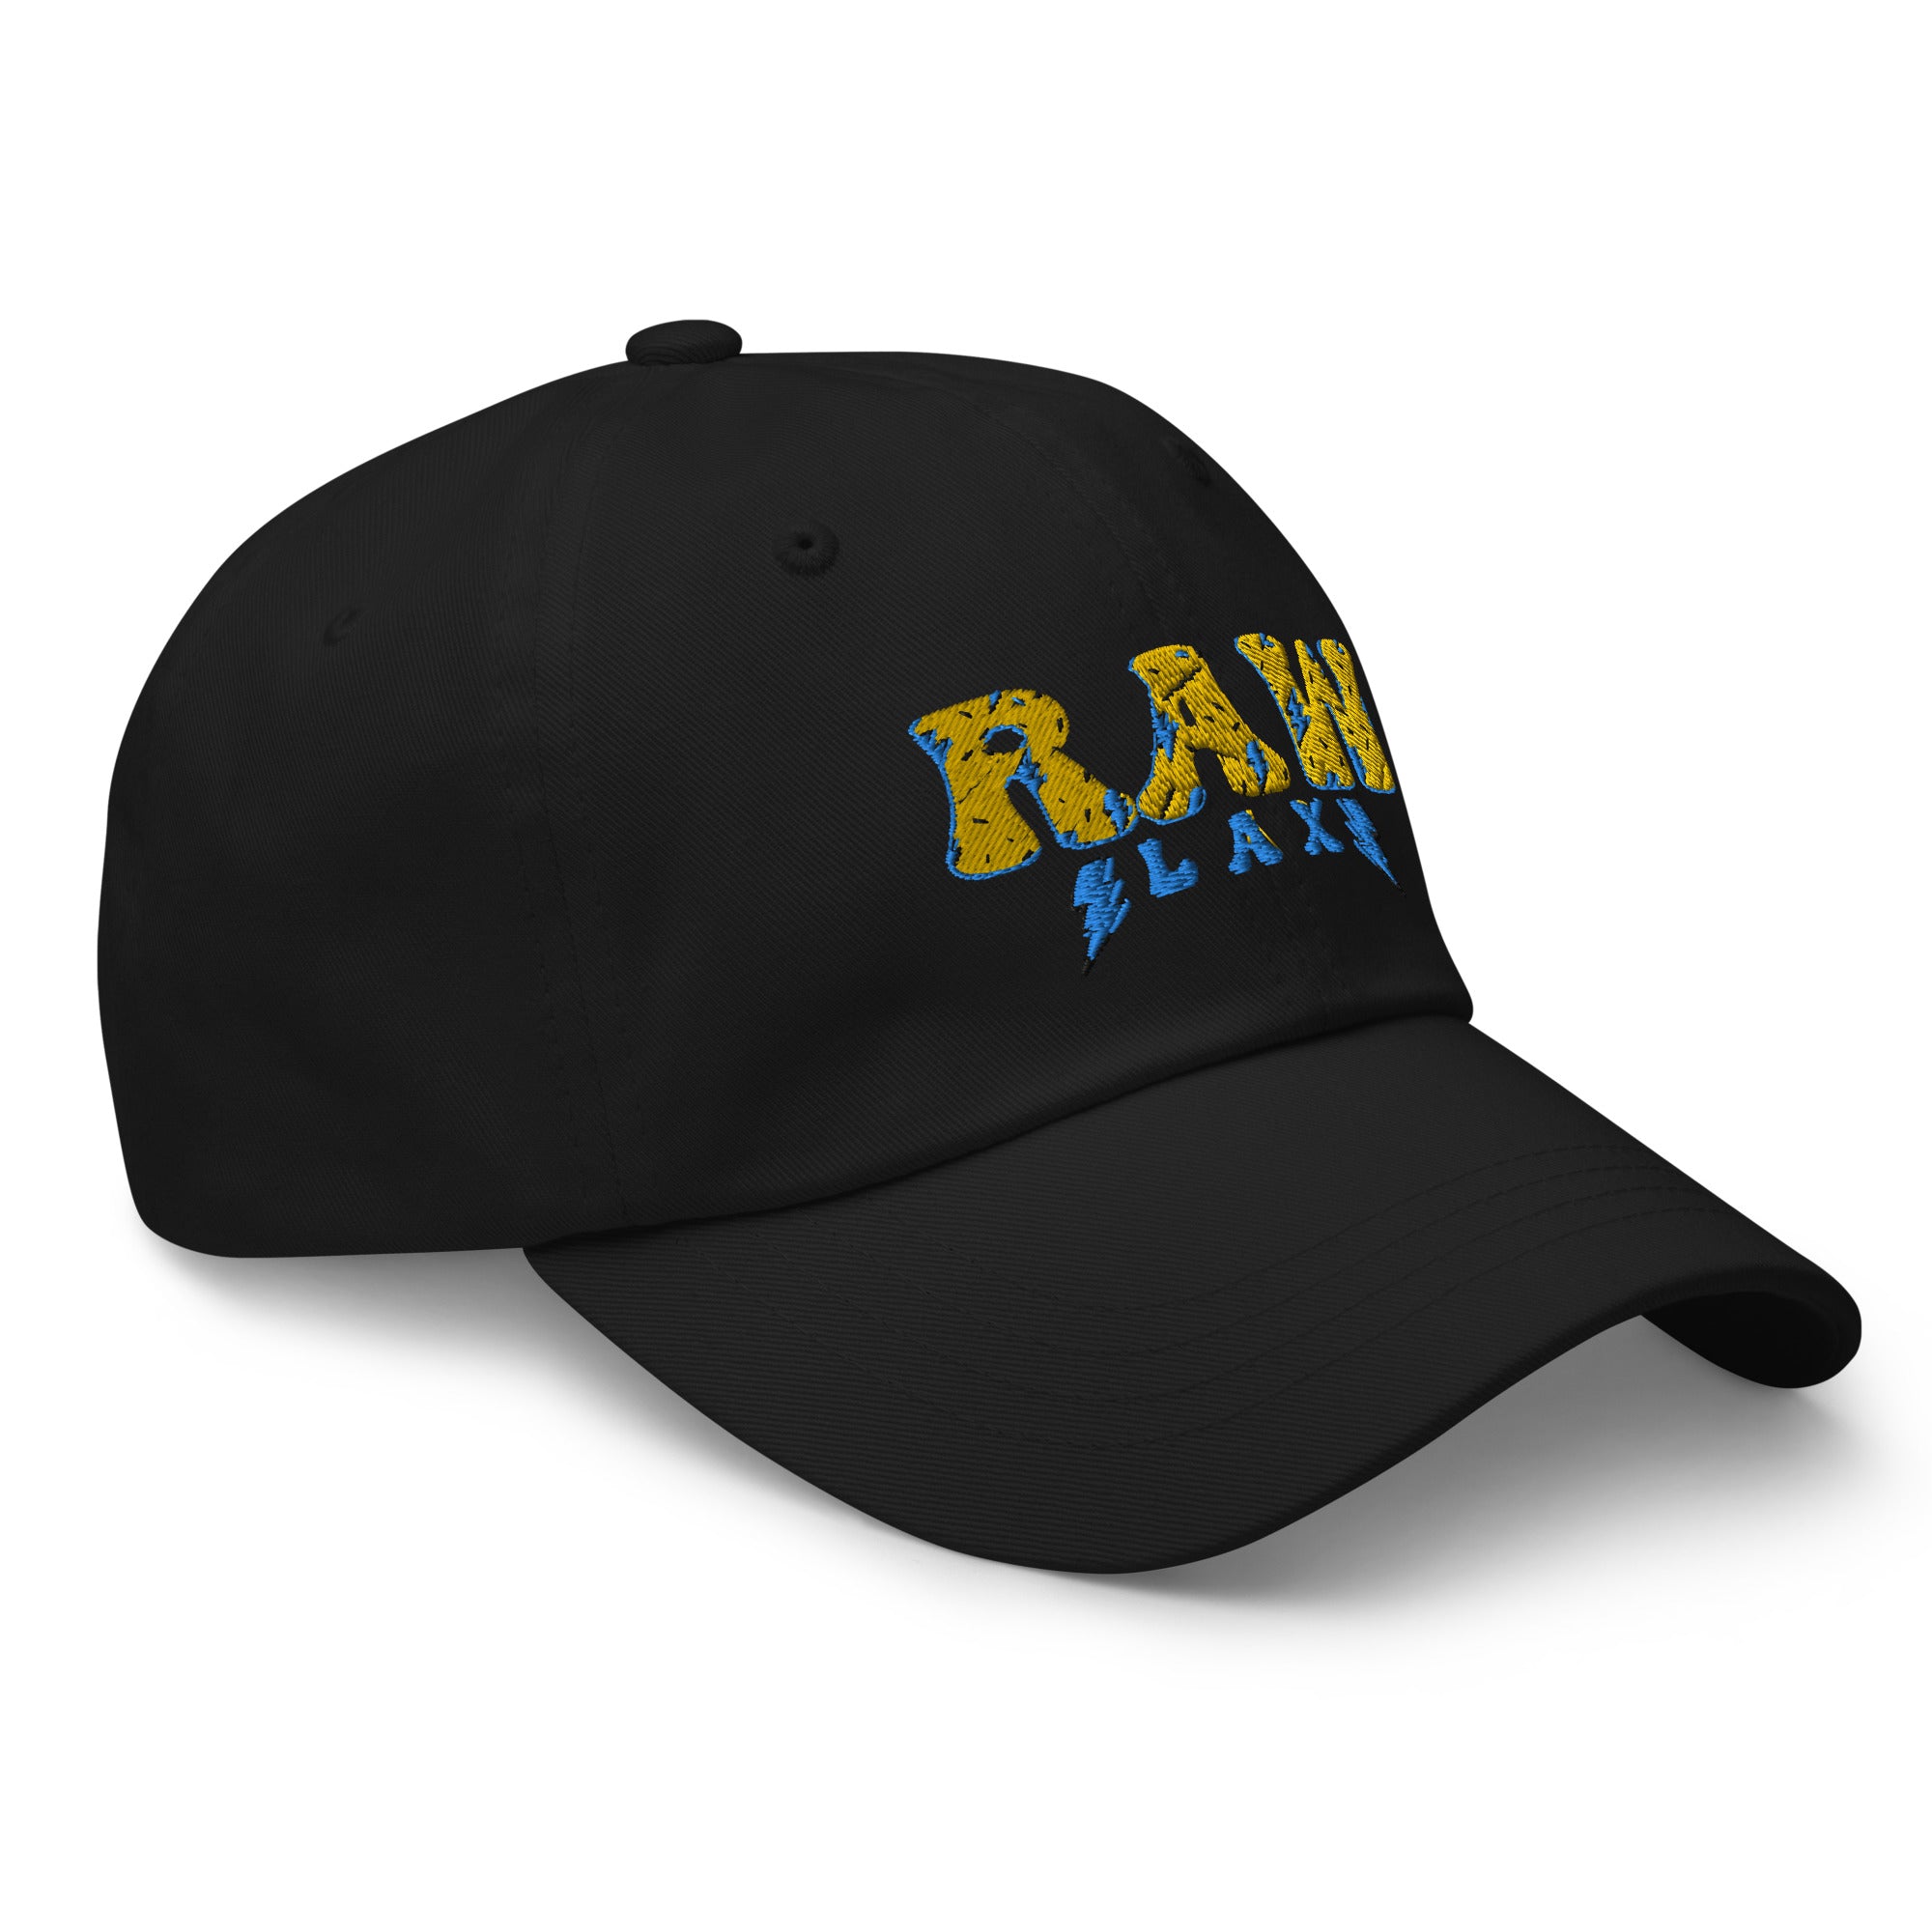 Raw Lax Dad hat